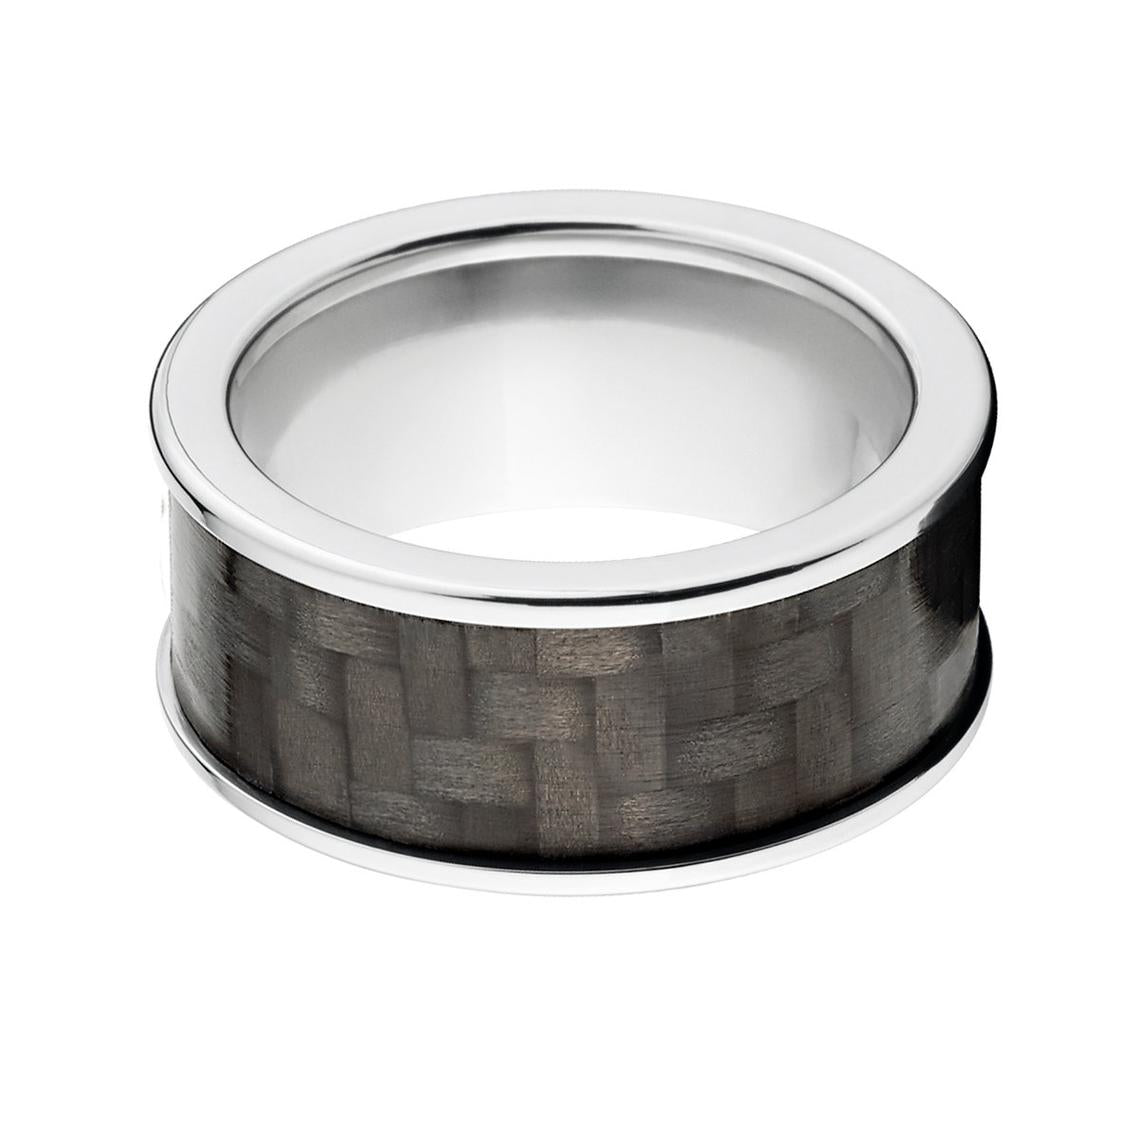 9mm wide titanium ring with black carbon fiber inlay